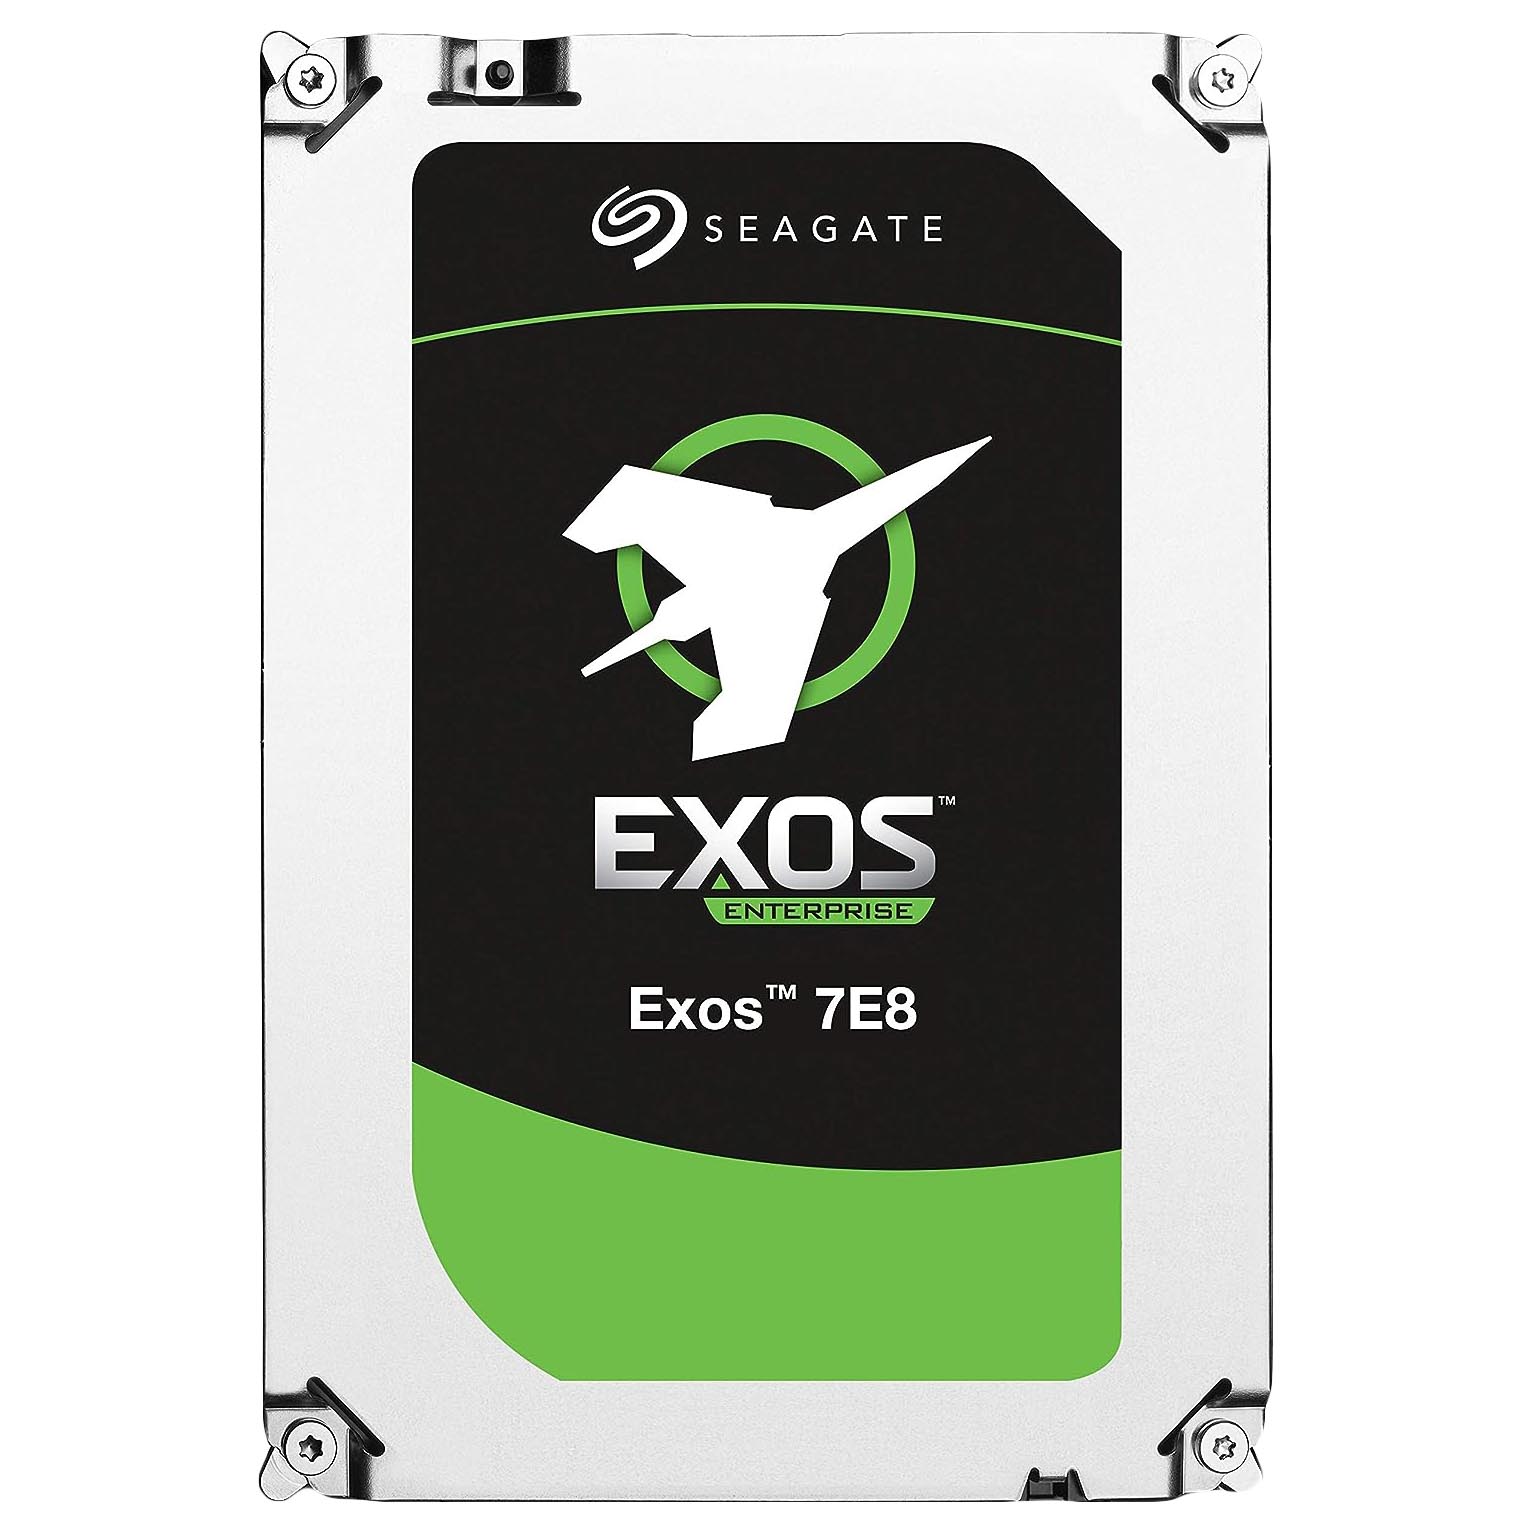 цена Внутренний жесткий диск Seagate Exos 7E8 512E, ST4000NM0115, 4 Тб